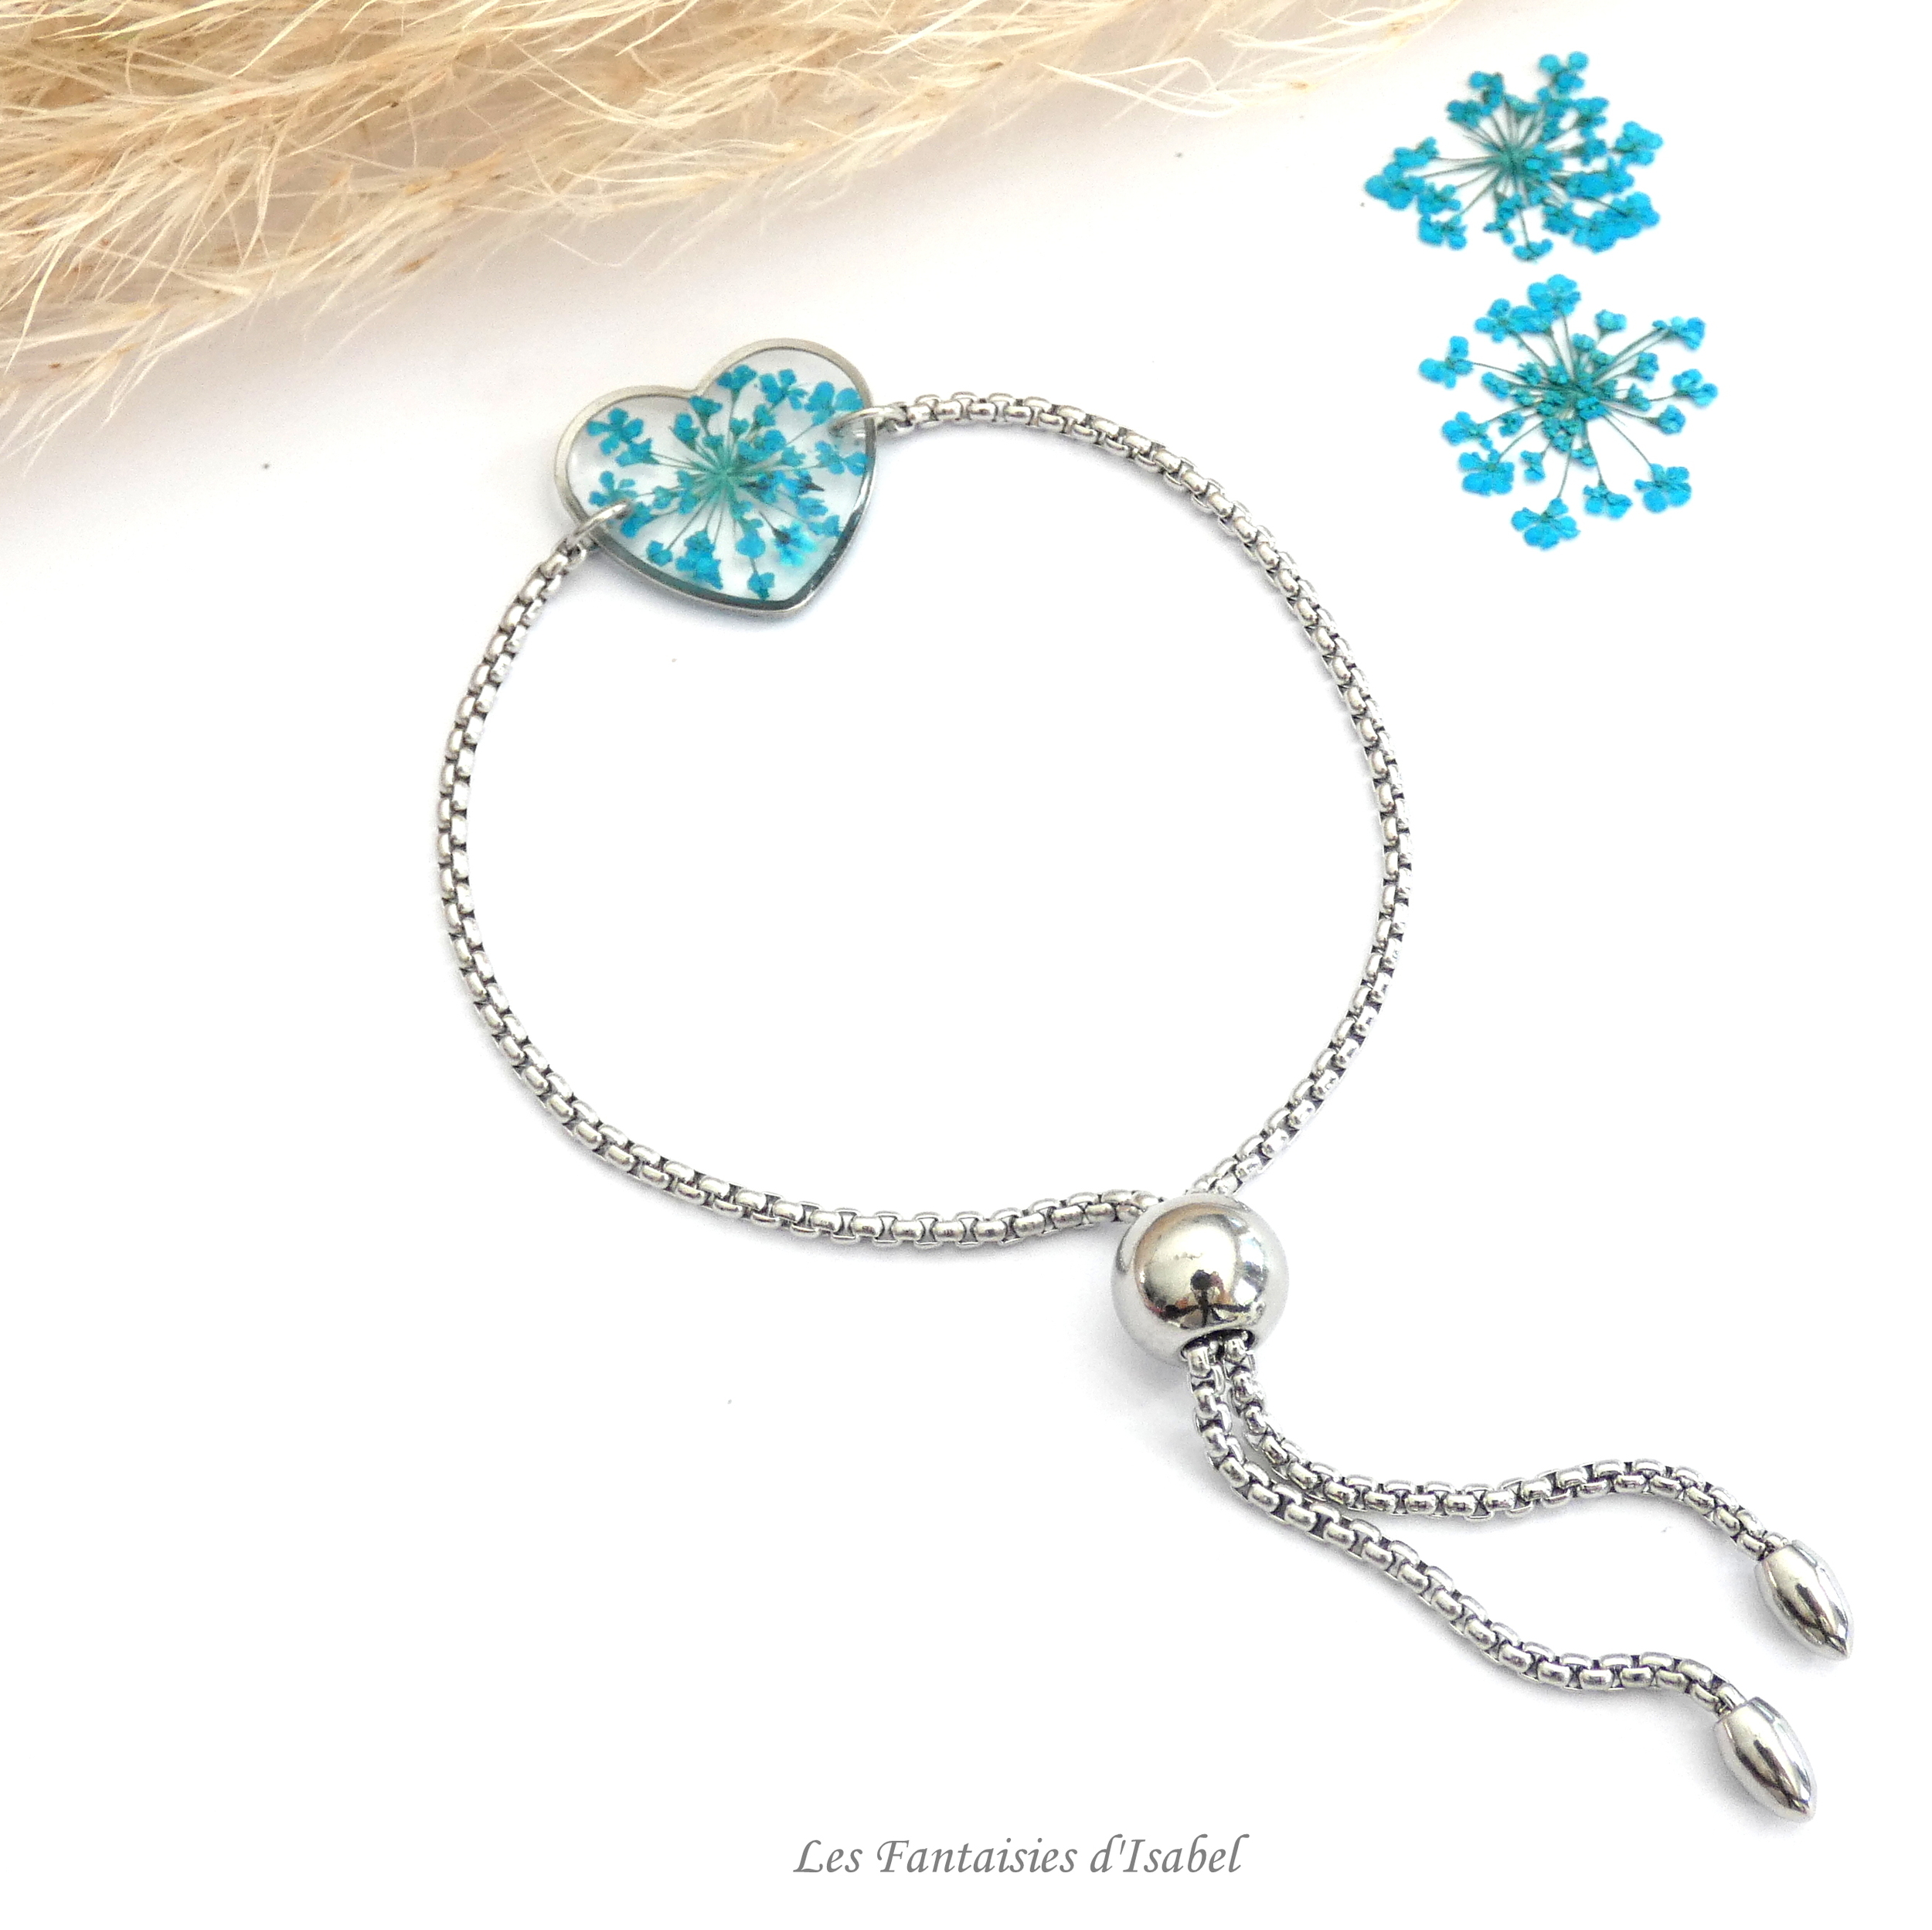 42-bracelet ajustable acier inox coeur fleur dentelle reine turquoise artisanal landes